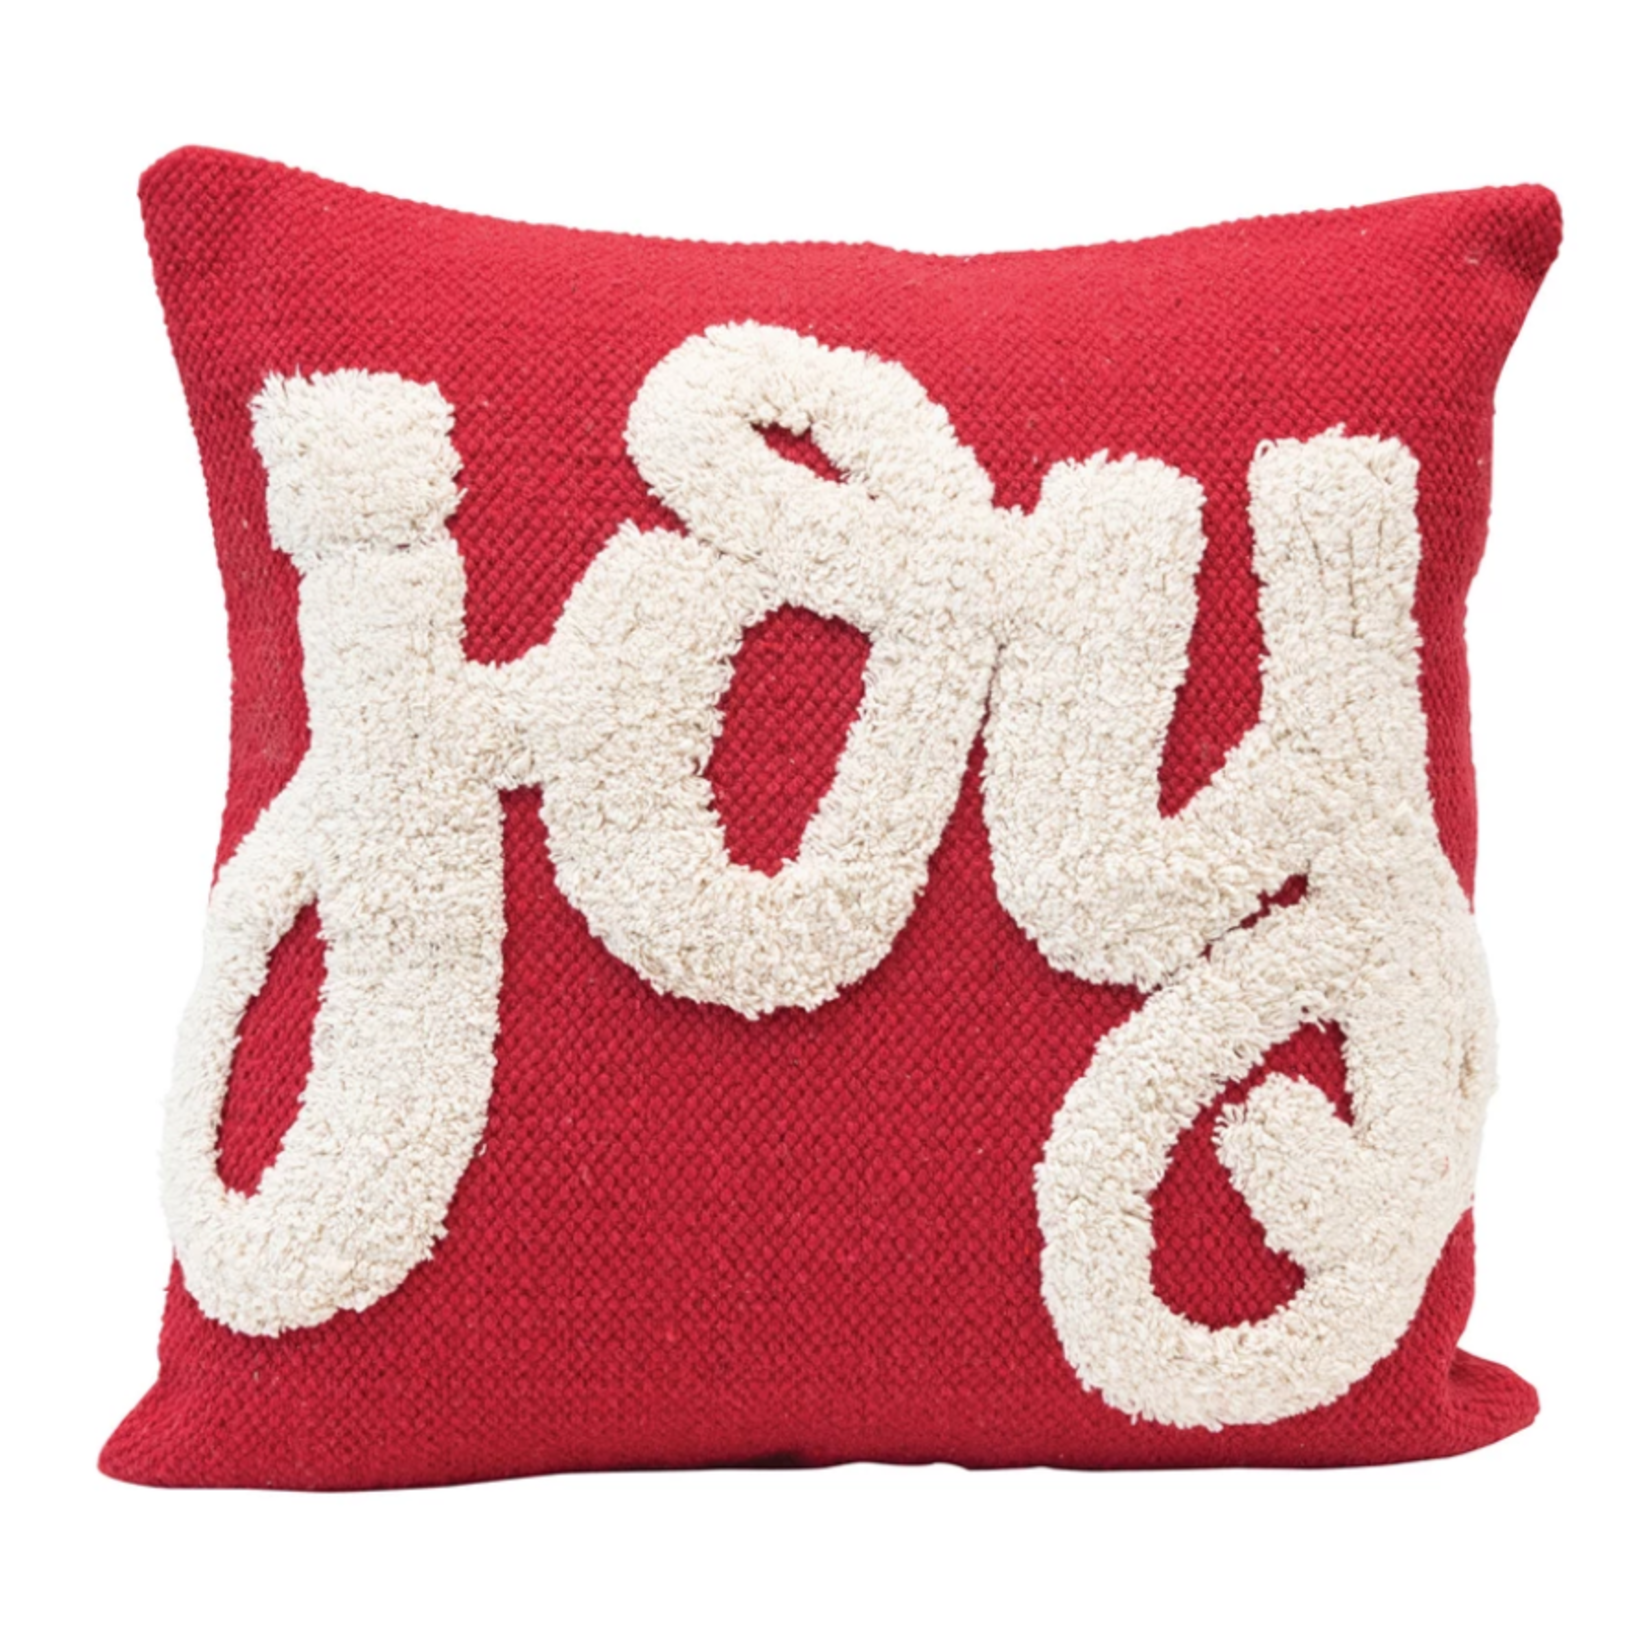 "Joy" Tufted Pillow, Red & White